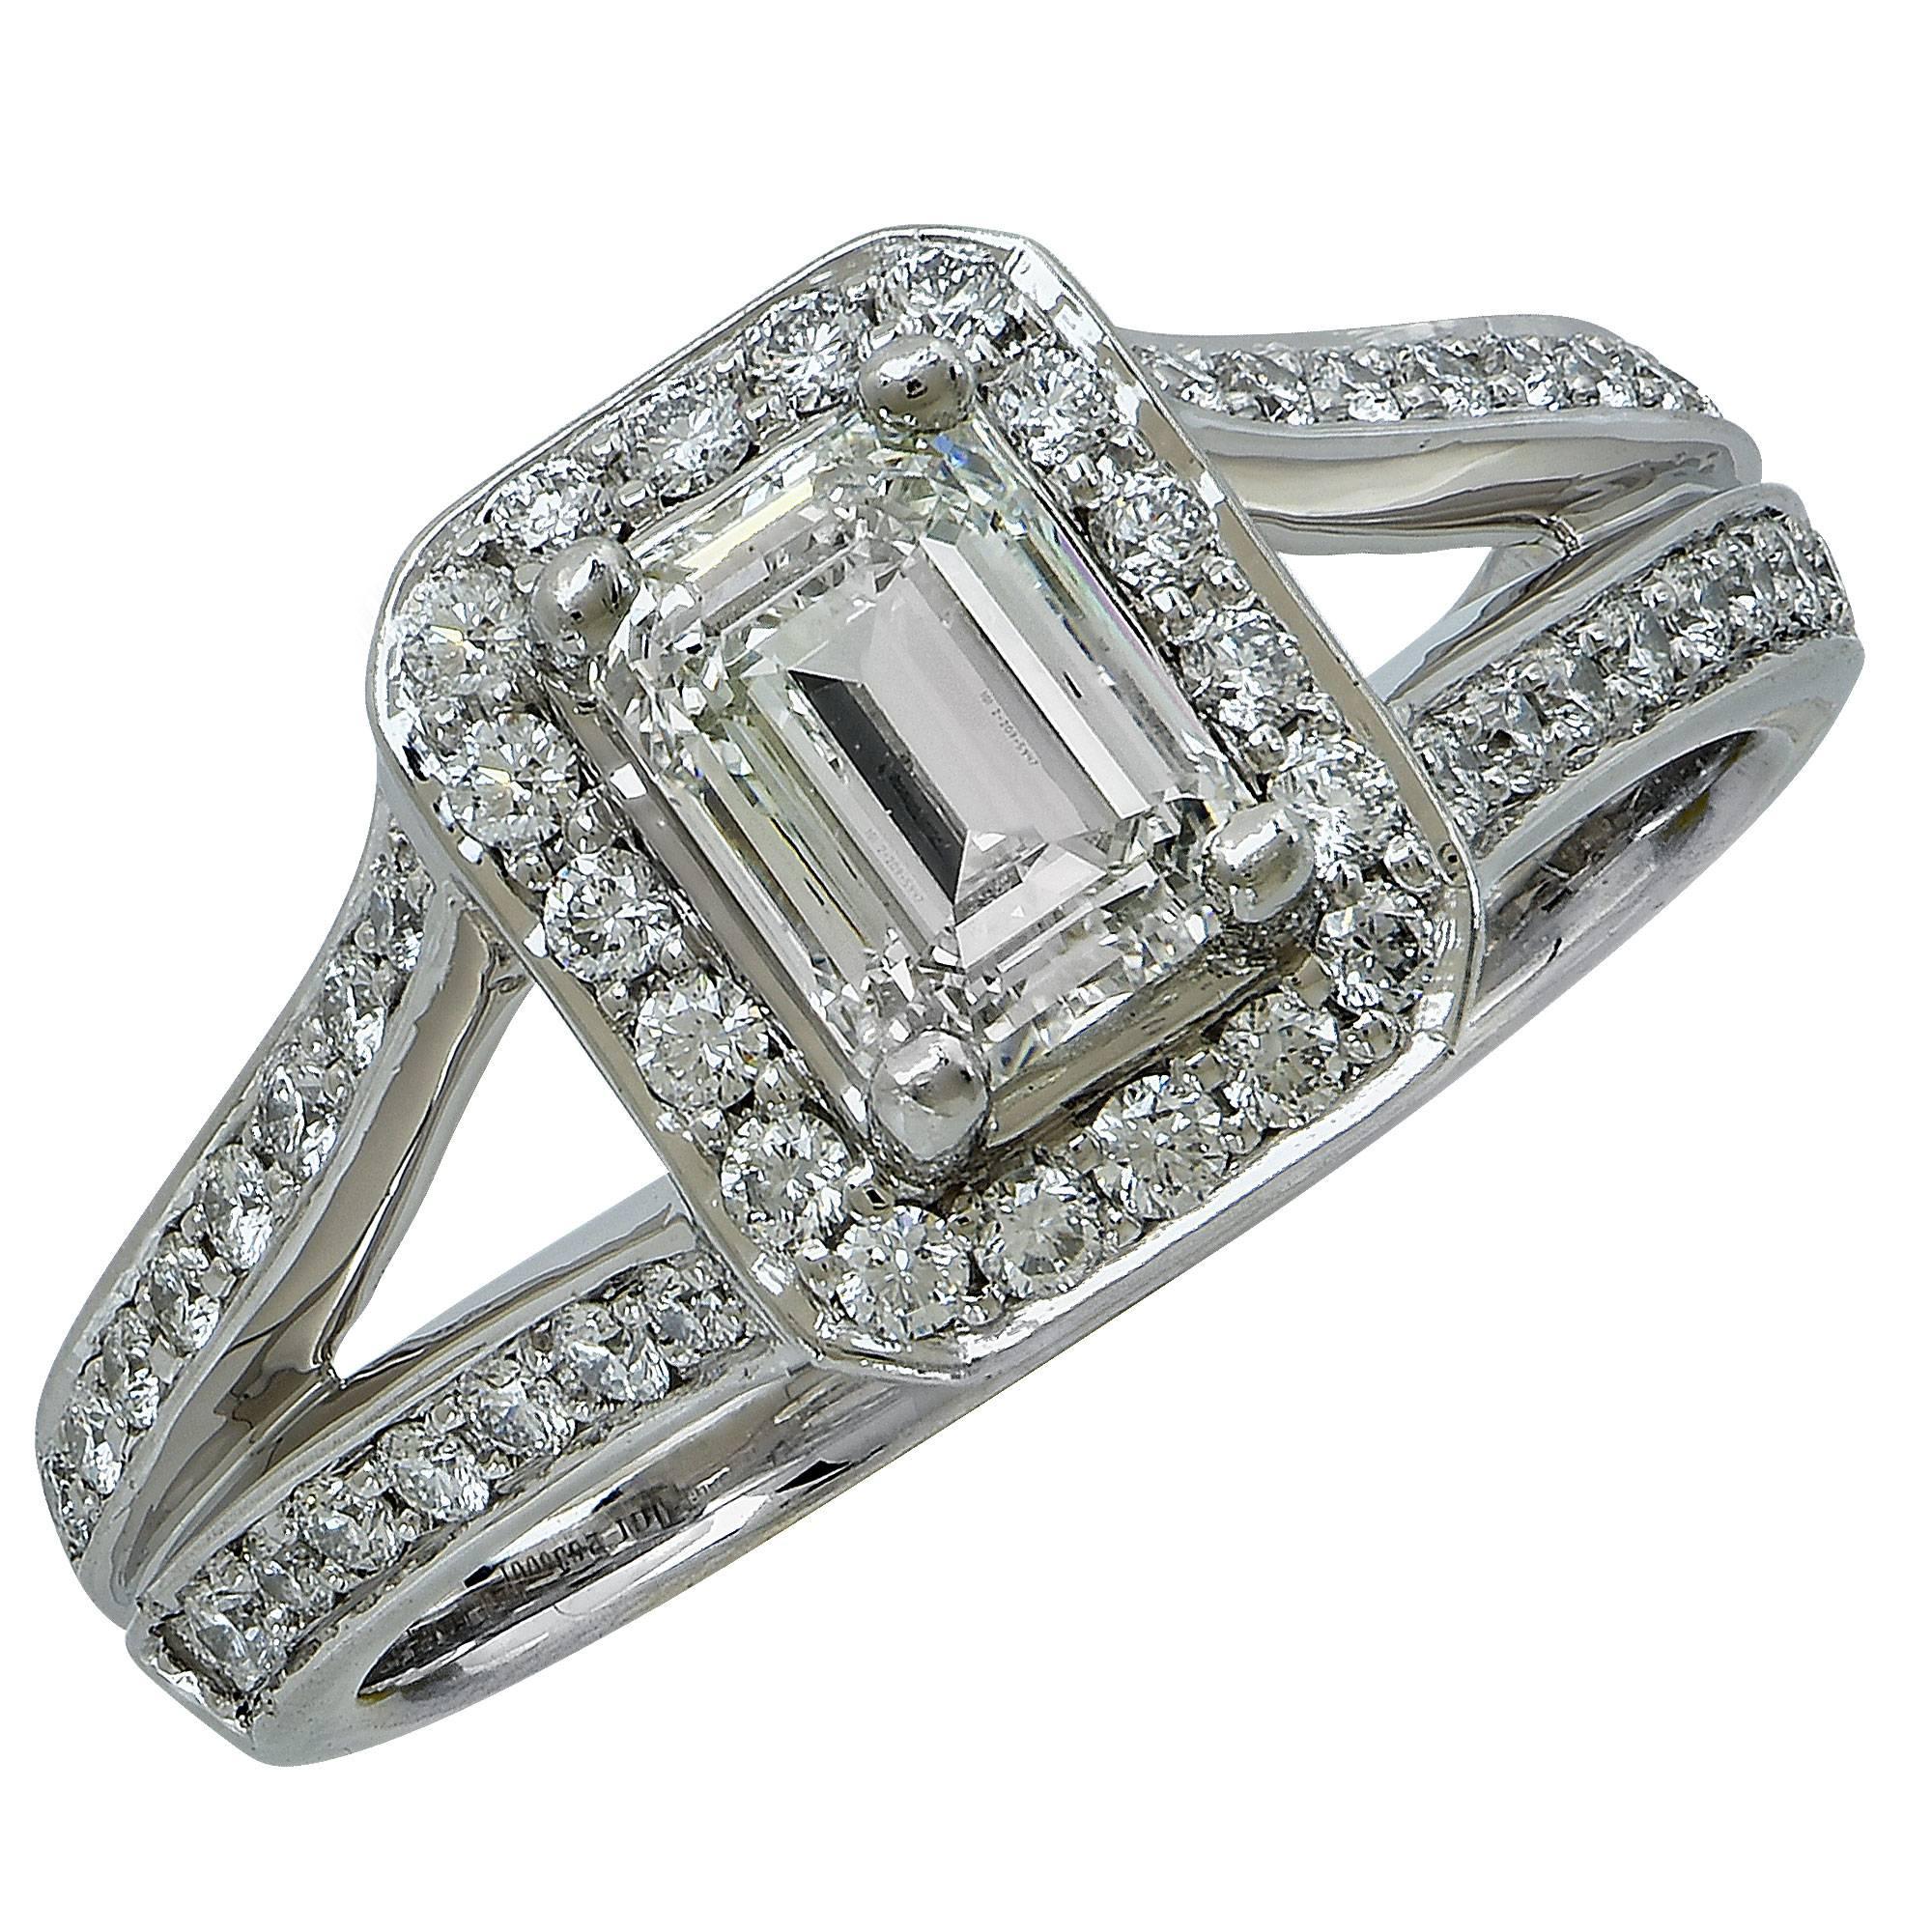 1.71 Carat Diamond Engagement Ring